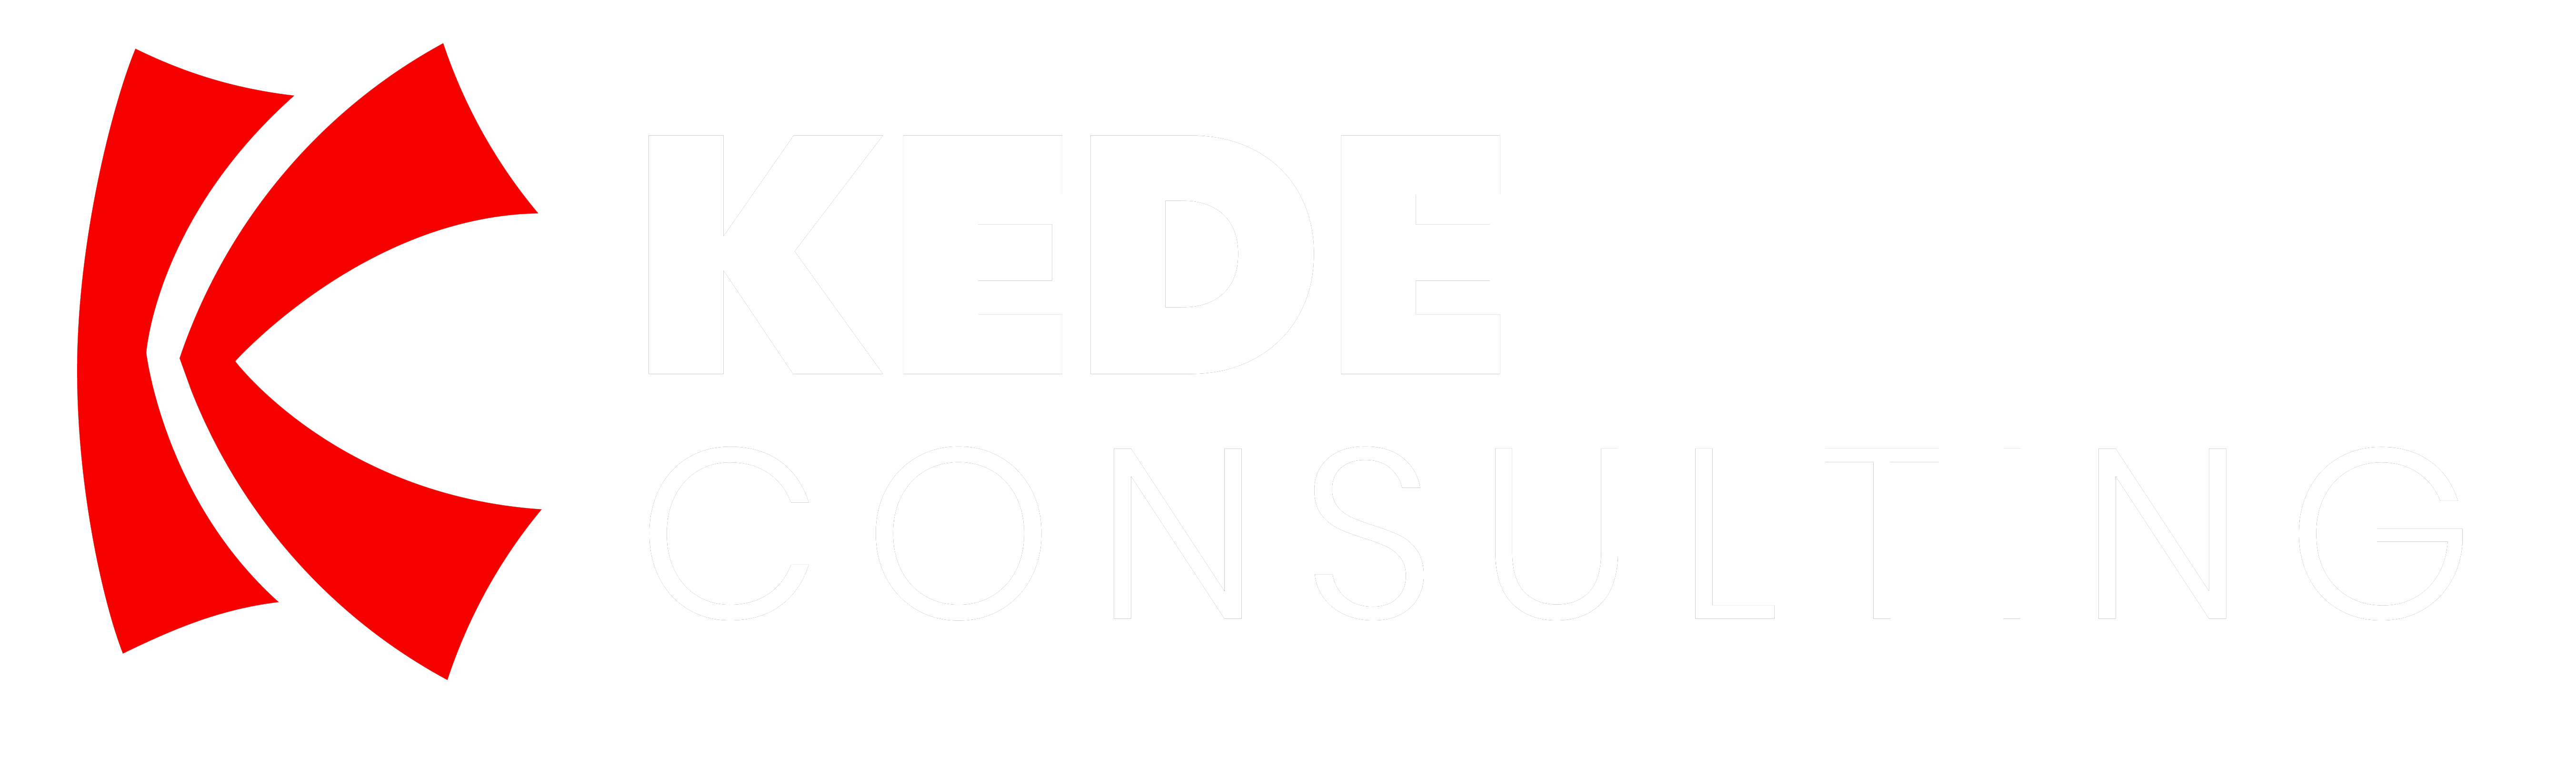 Manual de marca KedeConsulting 3